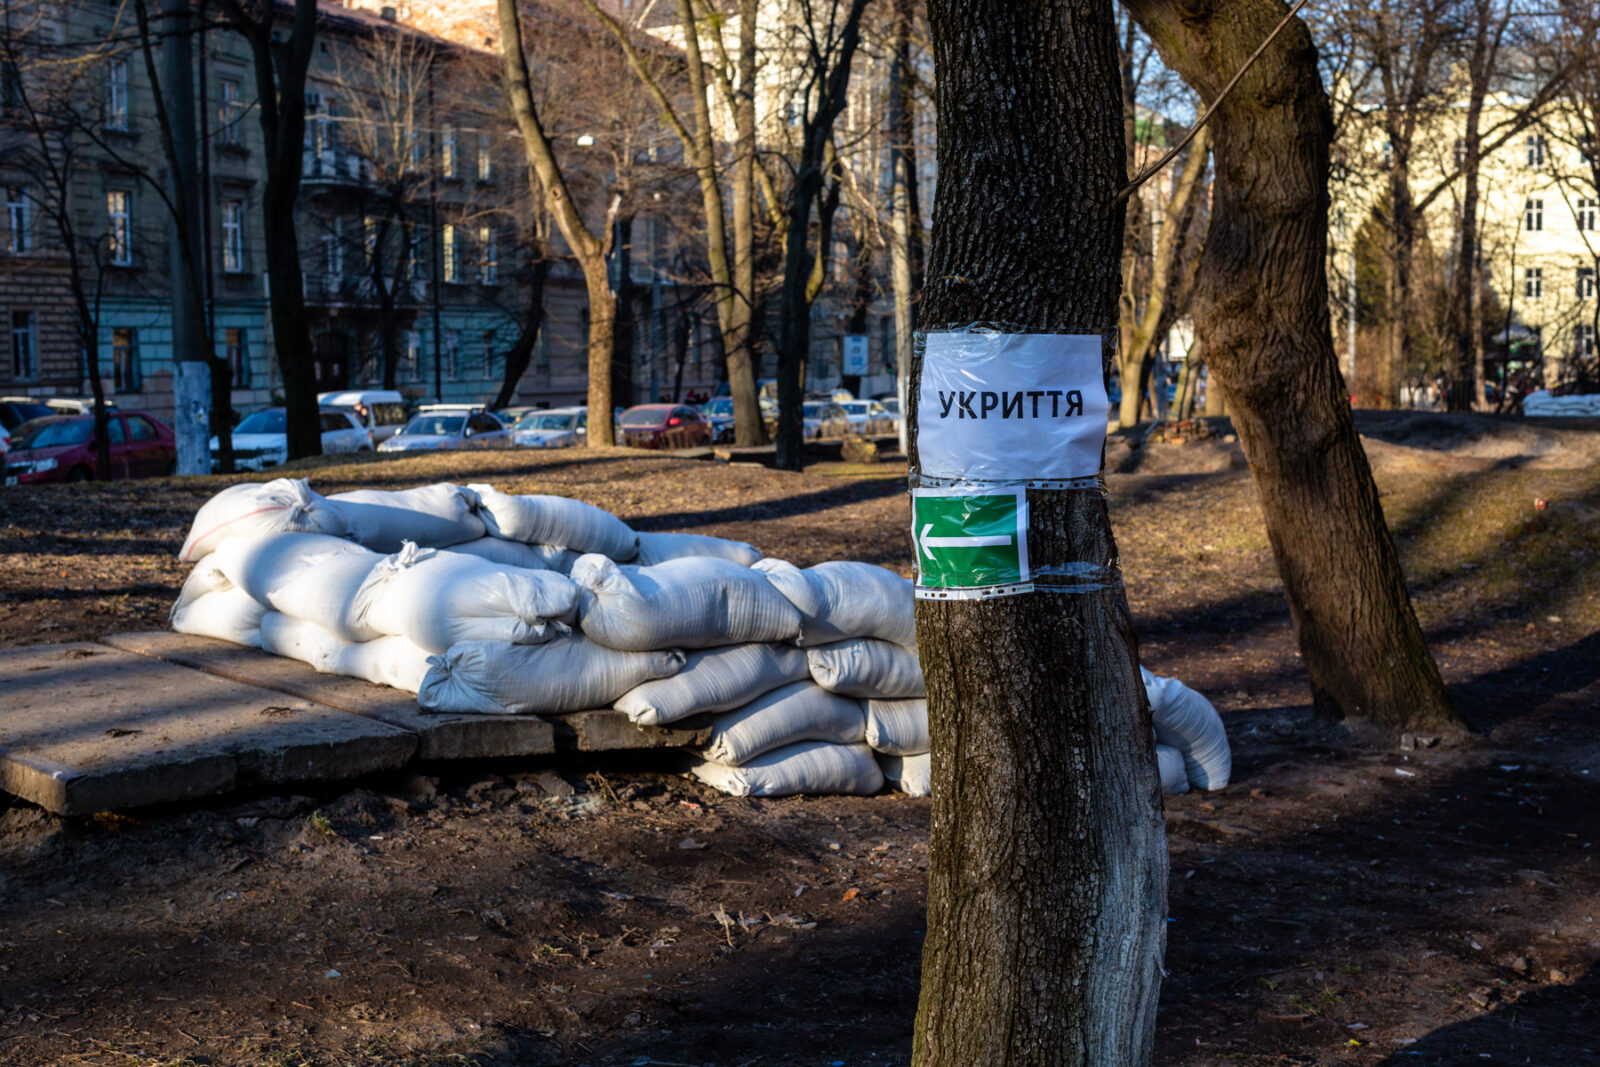 A bomb shelter in Ivan Franko park in Lviv, Ukraine. The sign reads SHELTER.